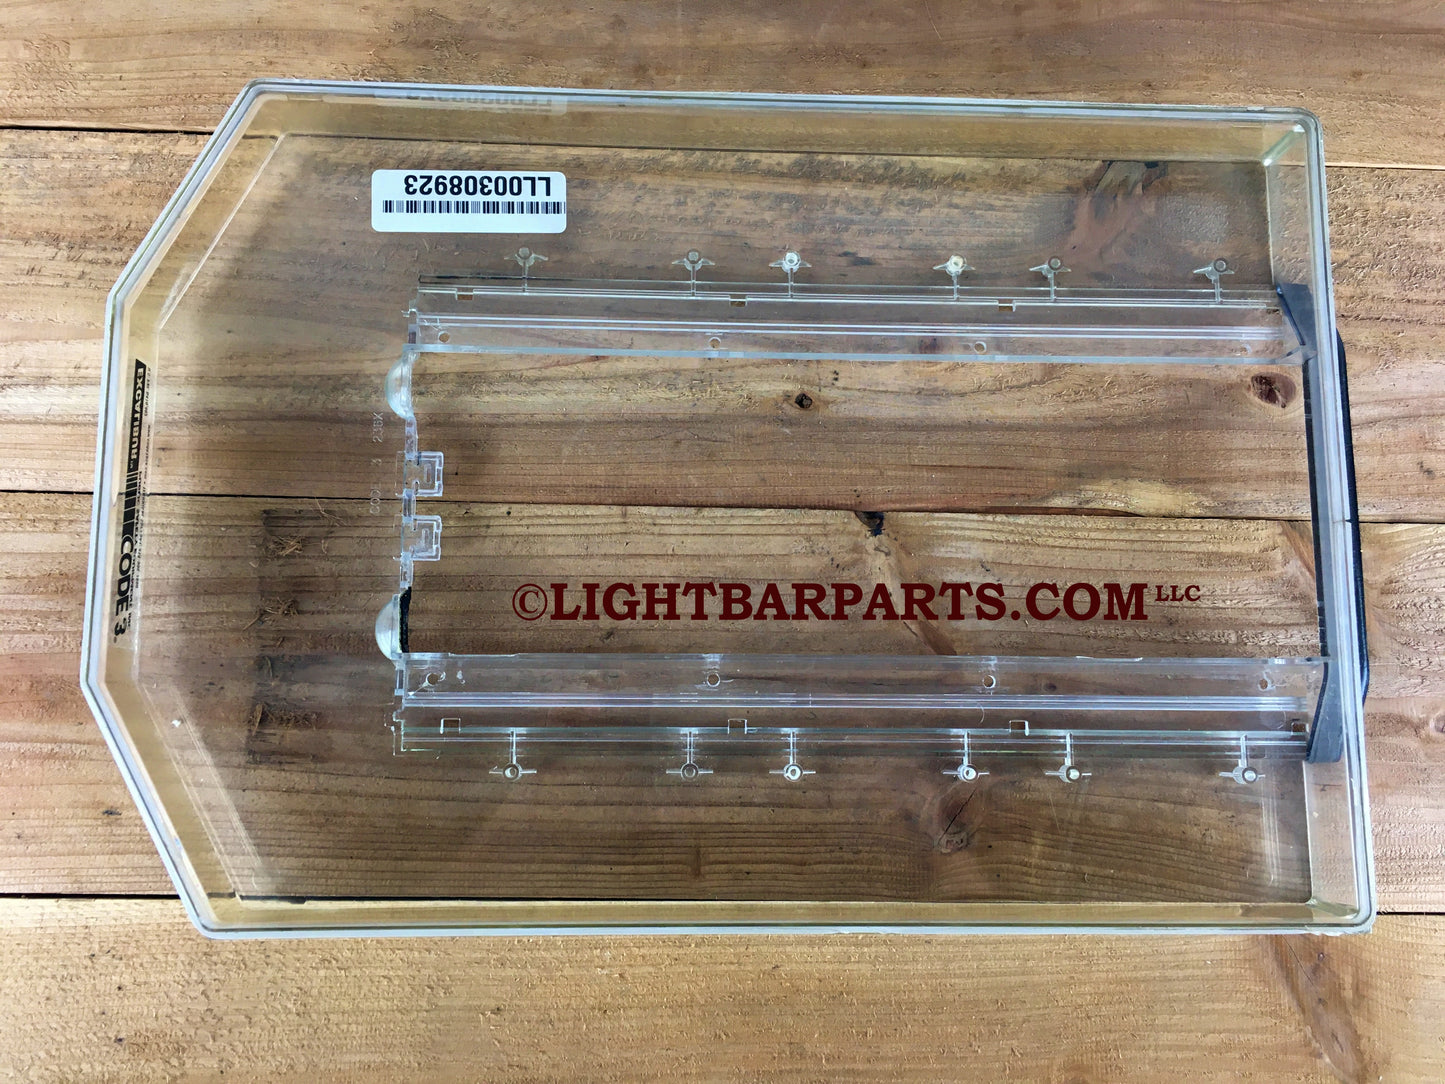 CODE 3 Excalibur Lightbar - Clear End - Base - P/N: 236X - light bar parts